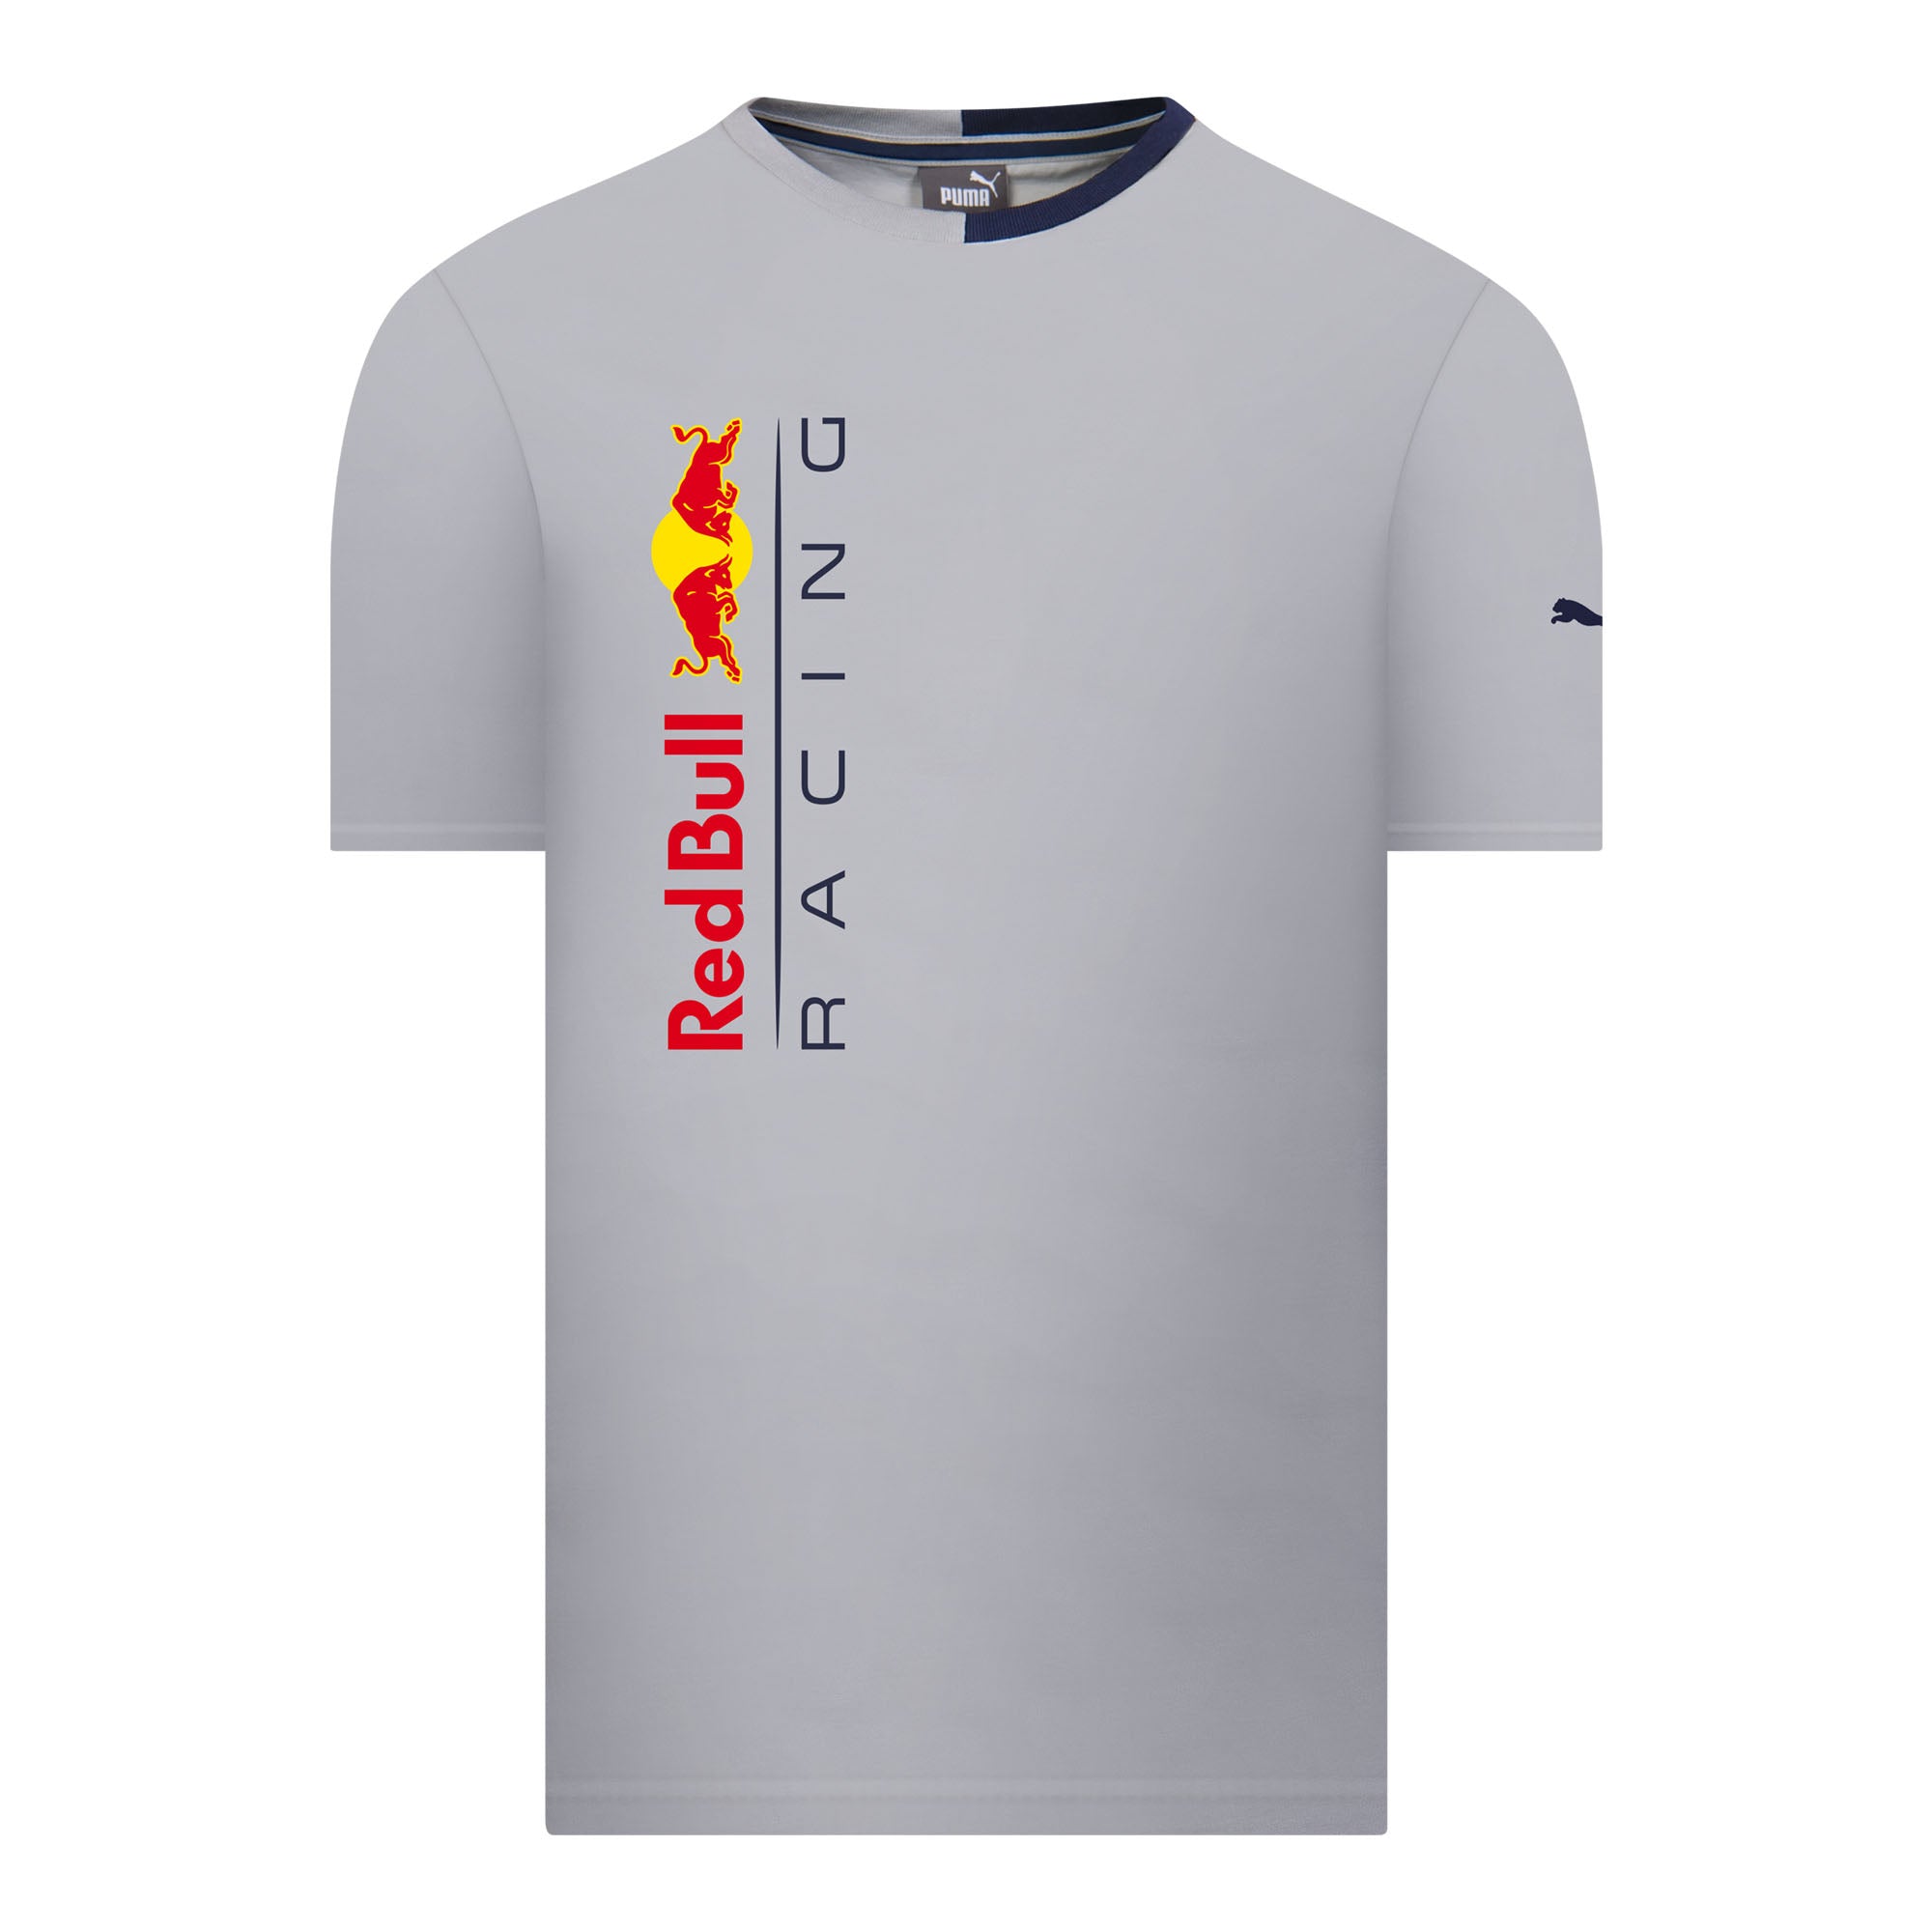 Womens Team T-Shirt 2022 - Red Bull Racing - Navy L